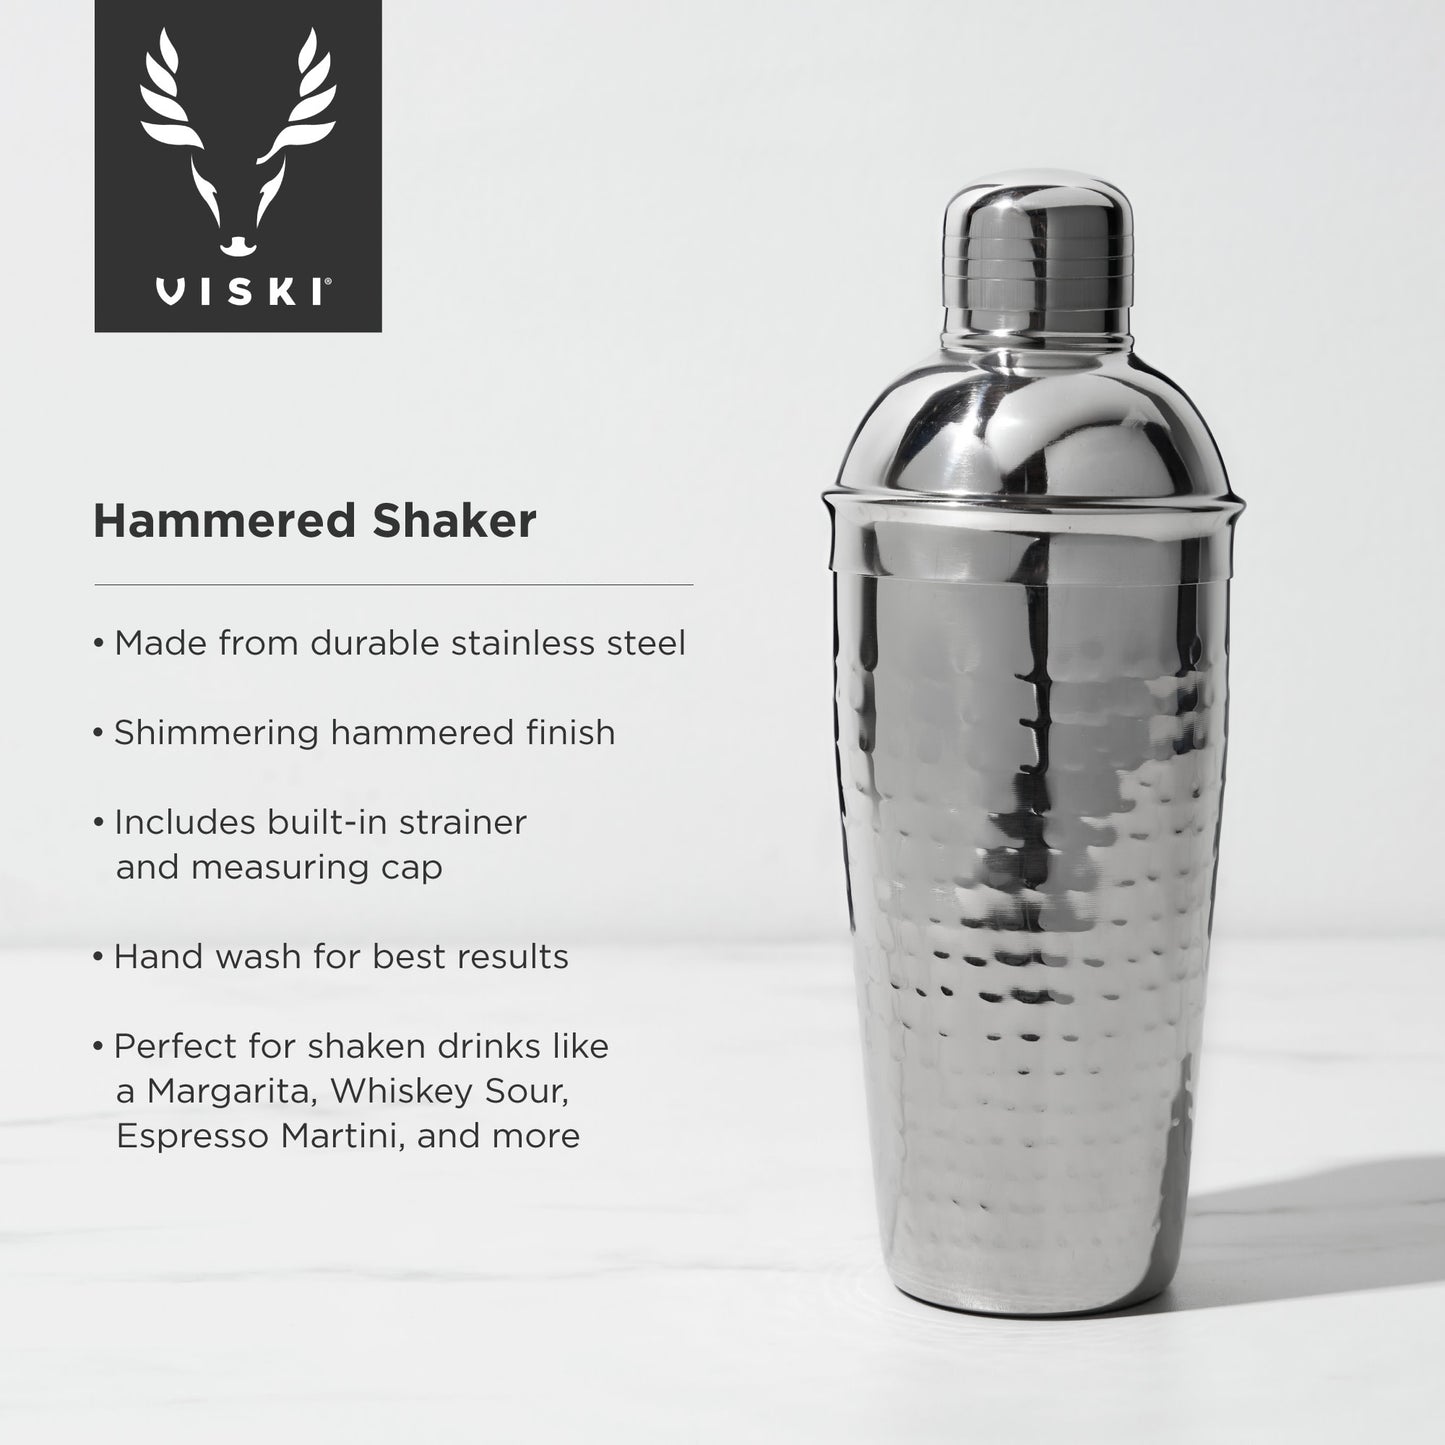 Hammered Shaker